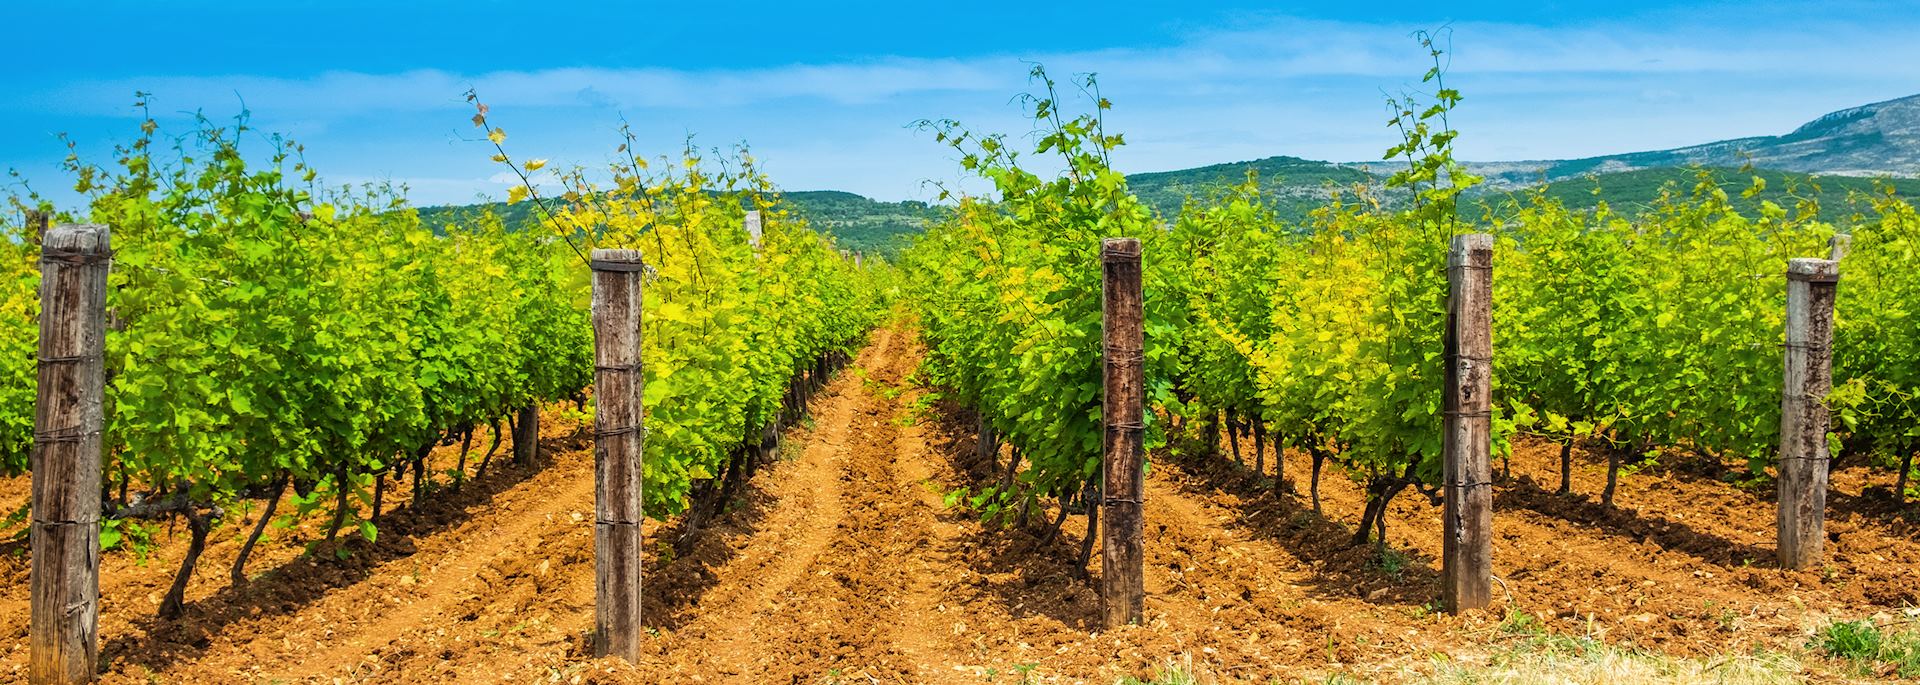 Vineyard on the Dalmatian Coast